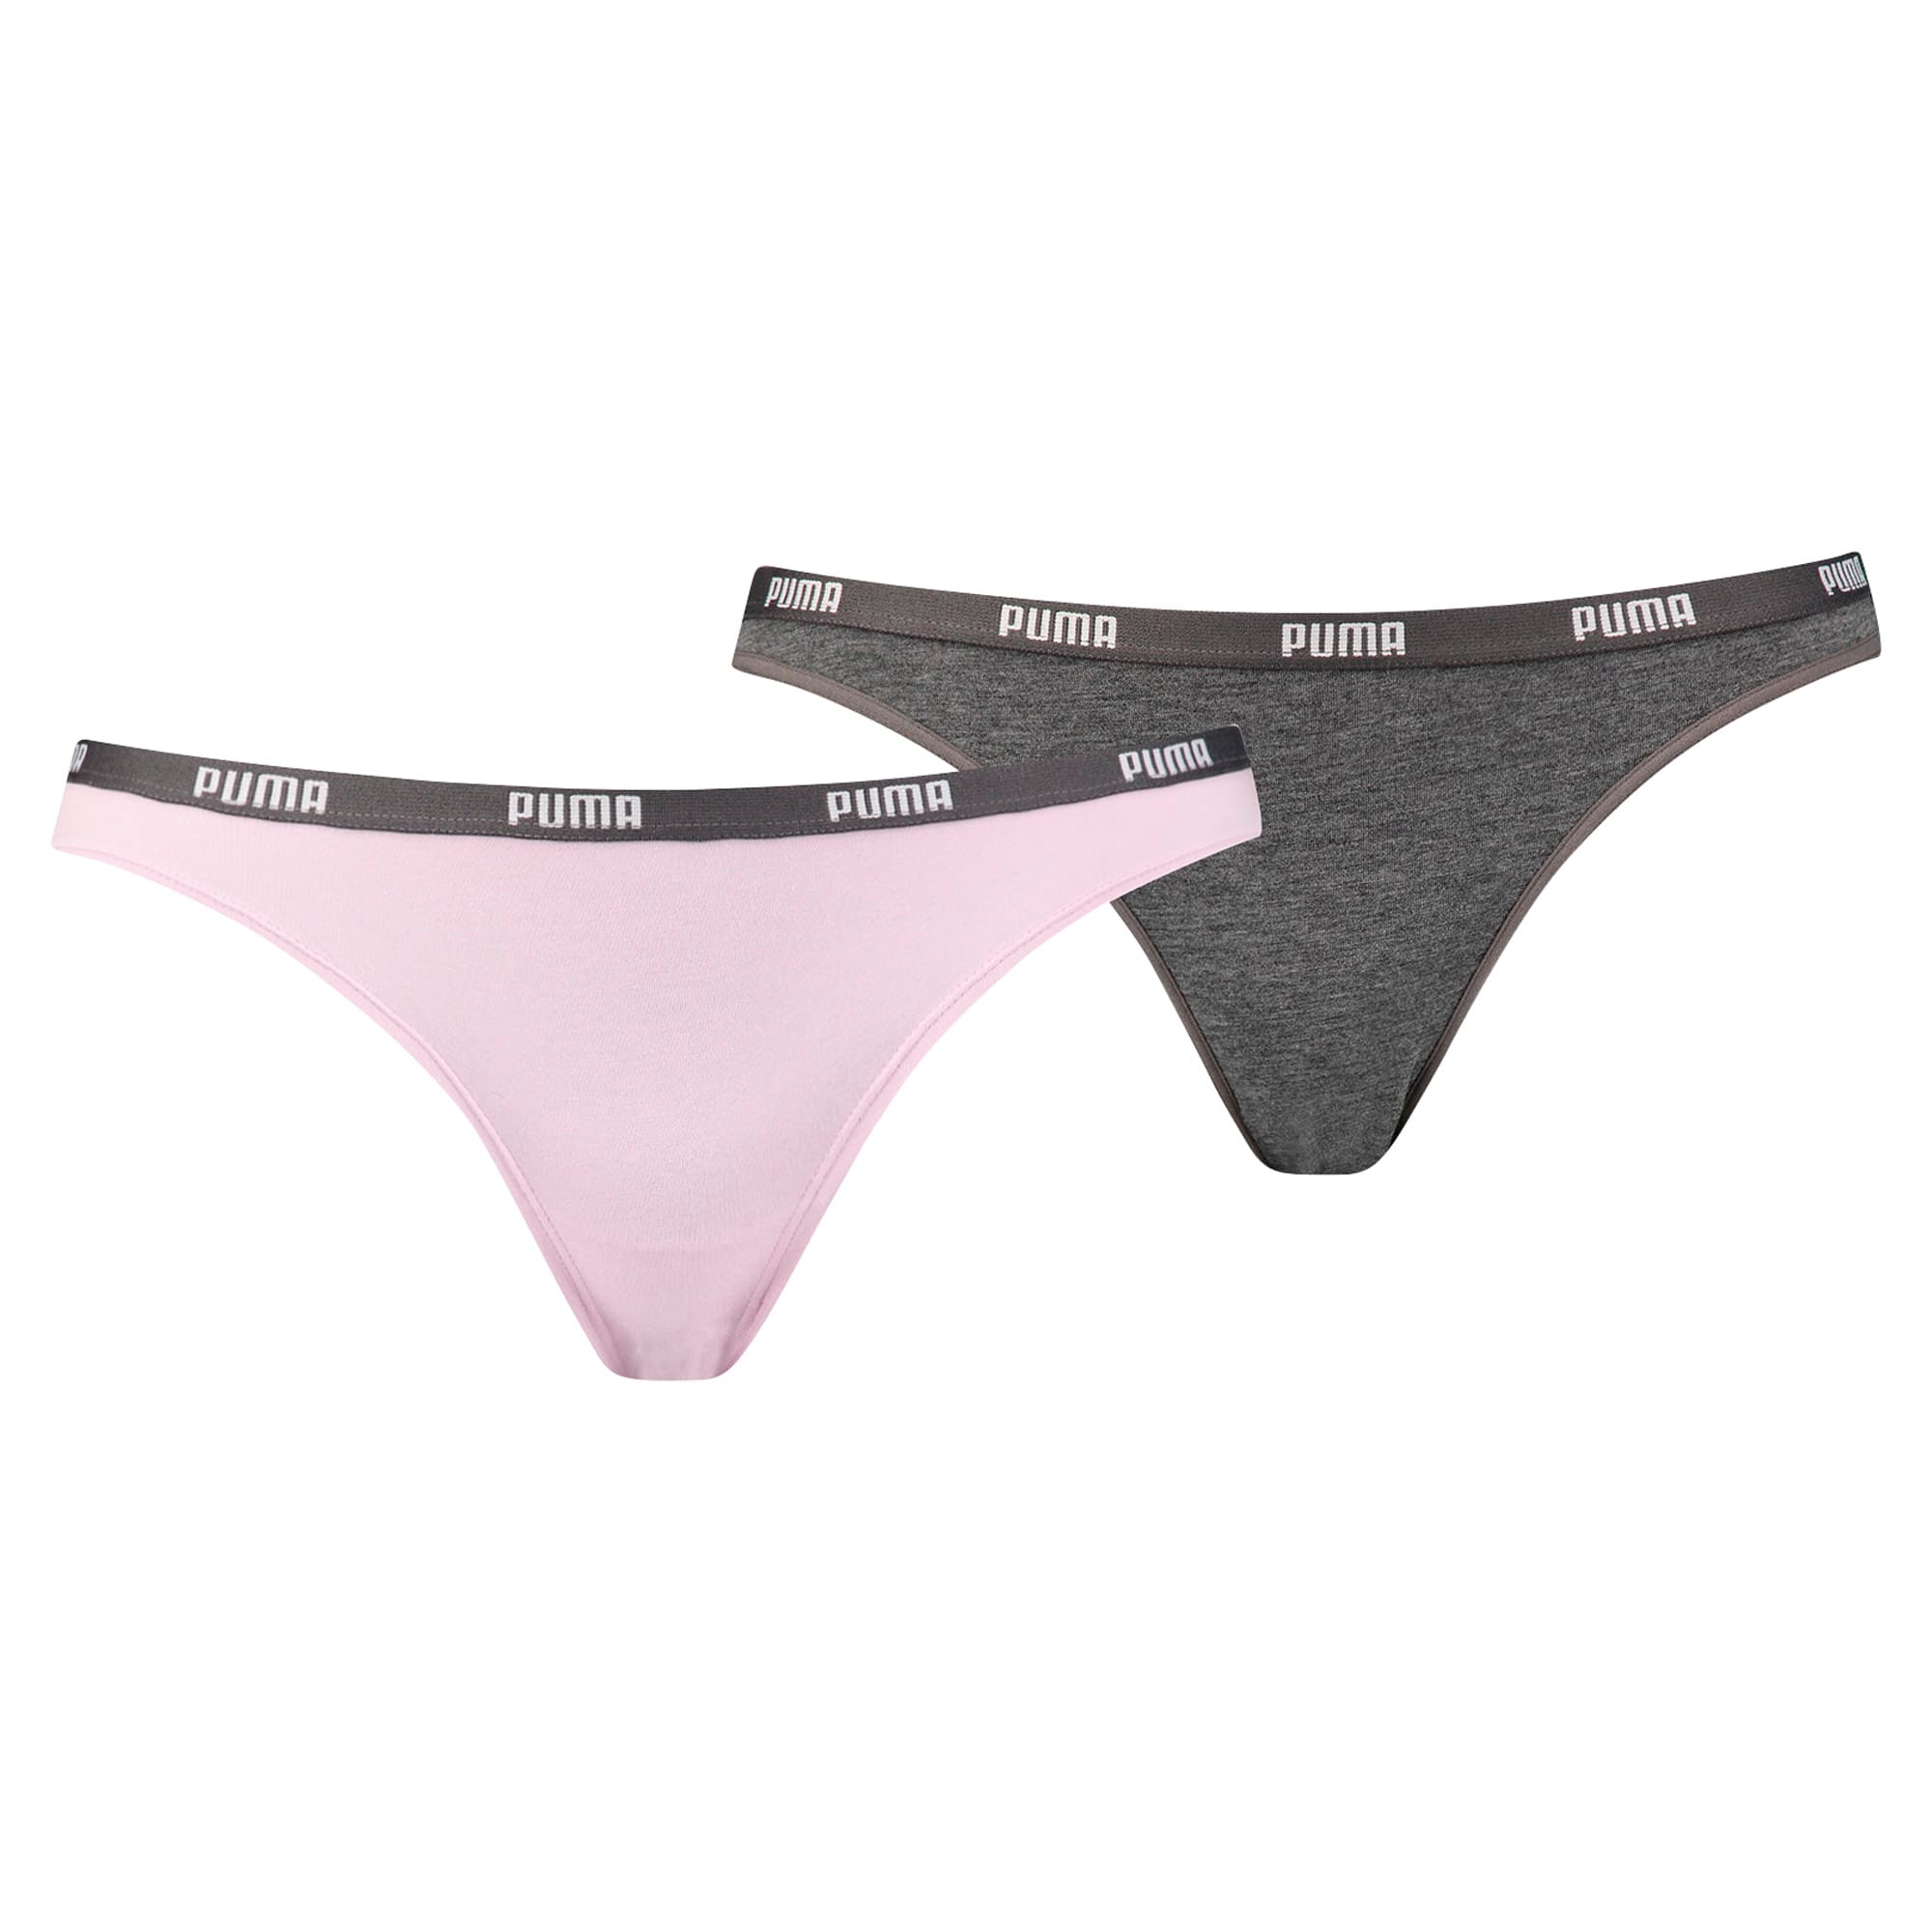 PUMA Iconic Women's Bikini Underwear (2 